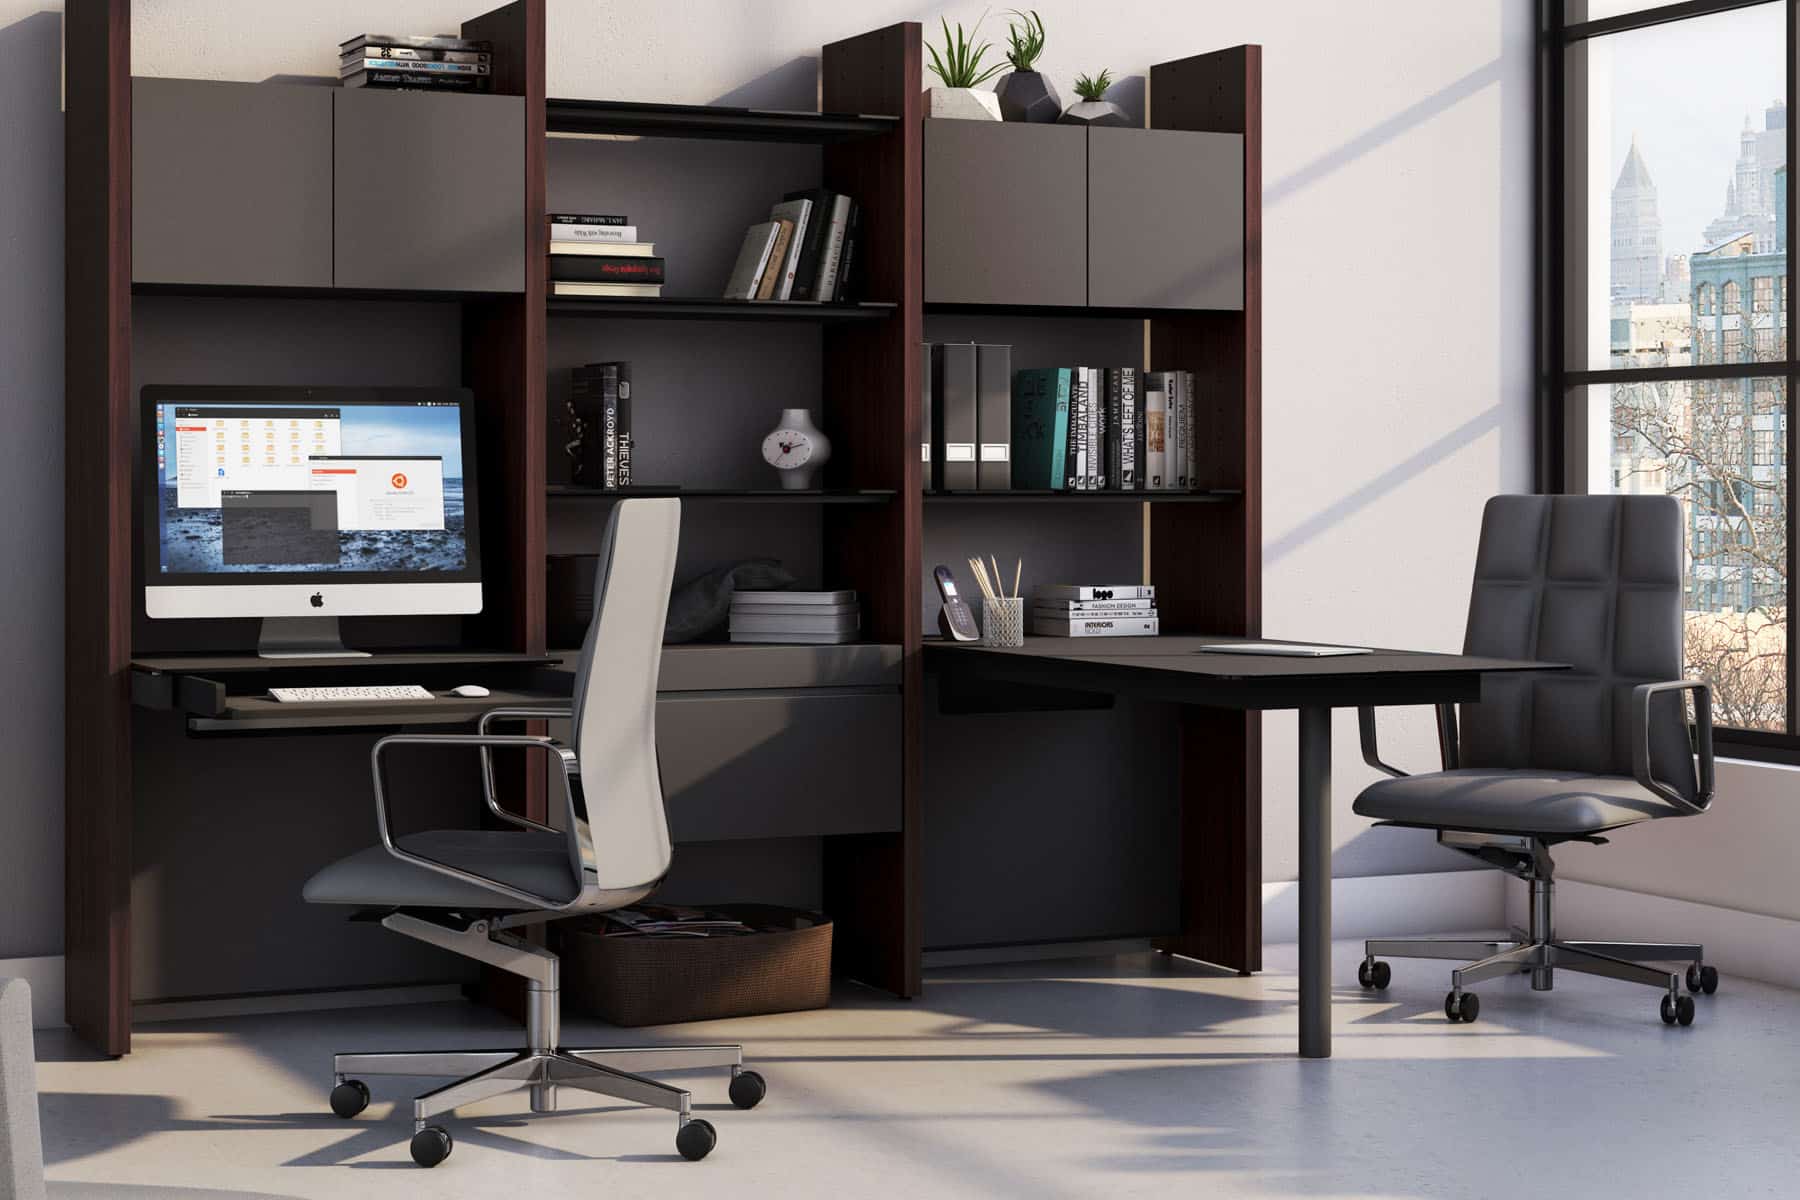 Modern Style Office Chairs & Desks With Storage Cabinet | Salt Lake City Furniture Store | San Fran Design